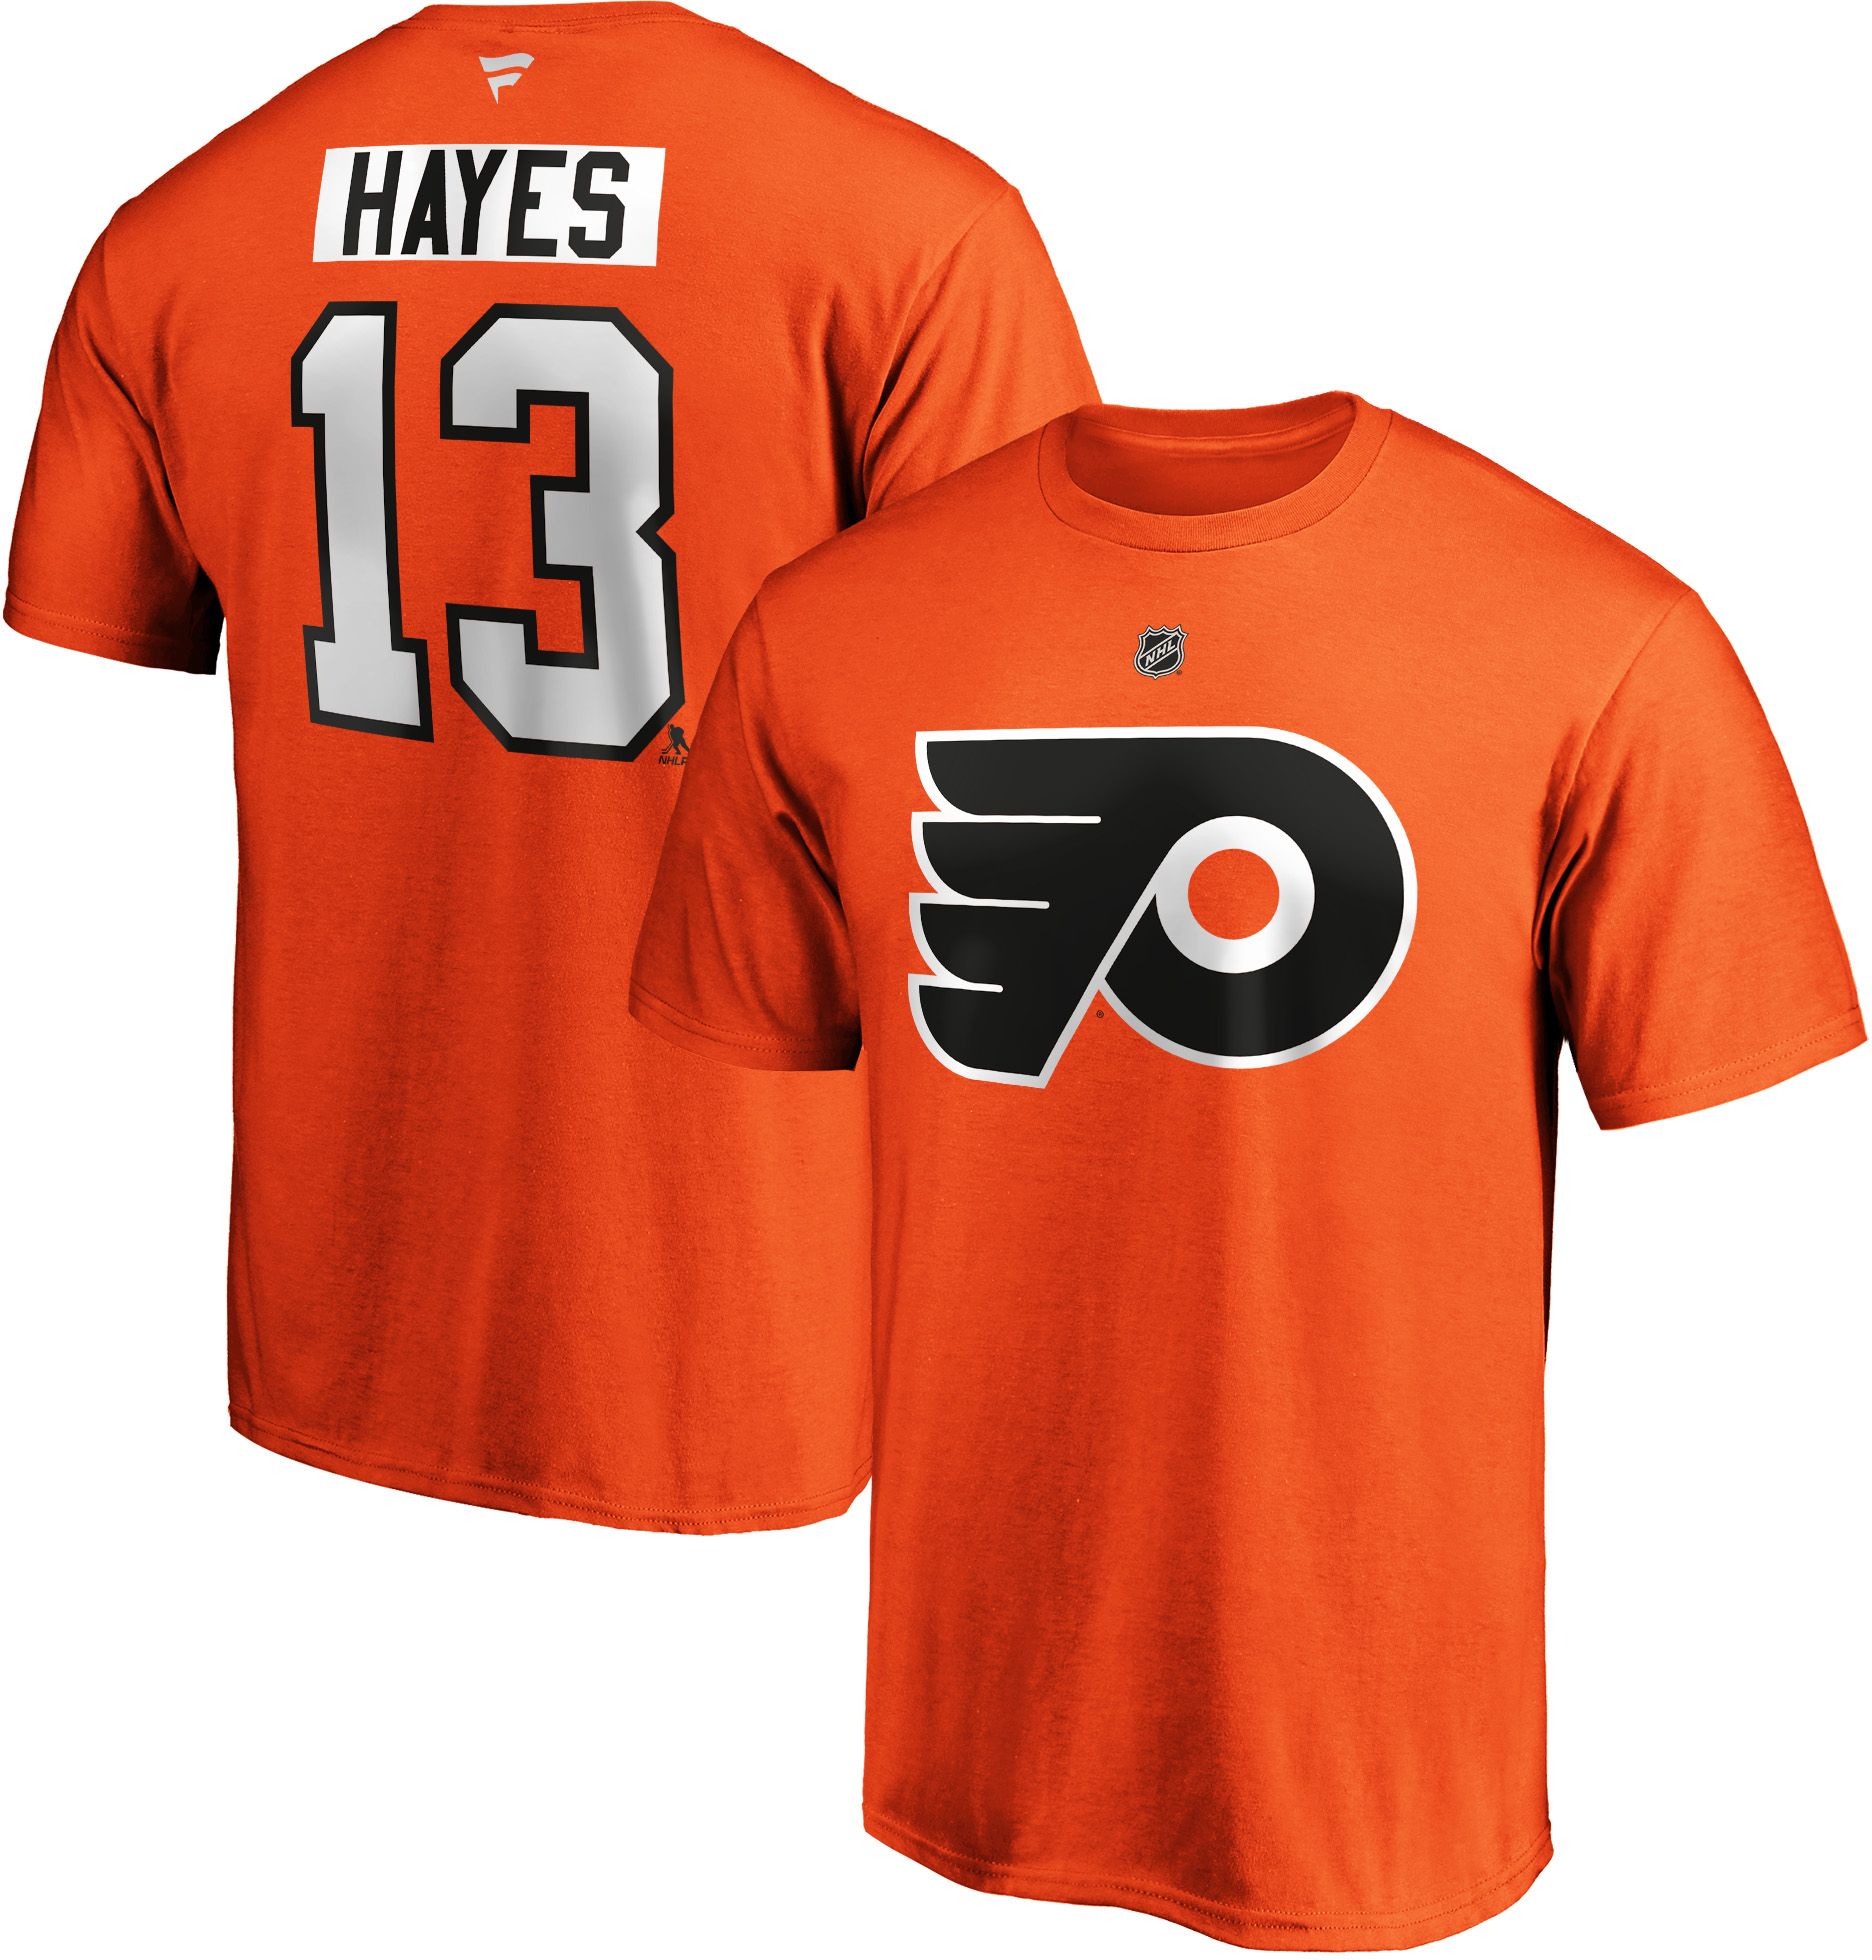 Kevin Hayes #13 Orange Player T-Shirt 